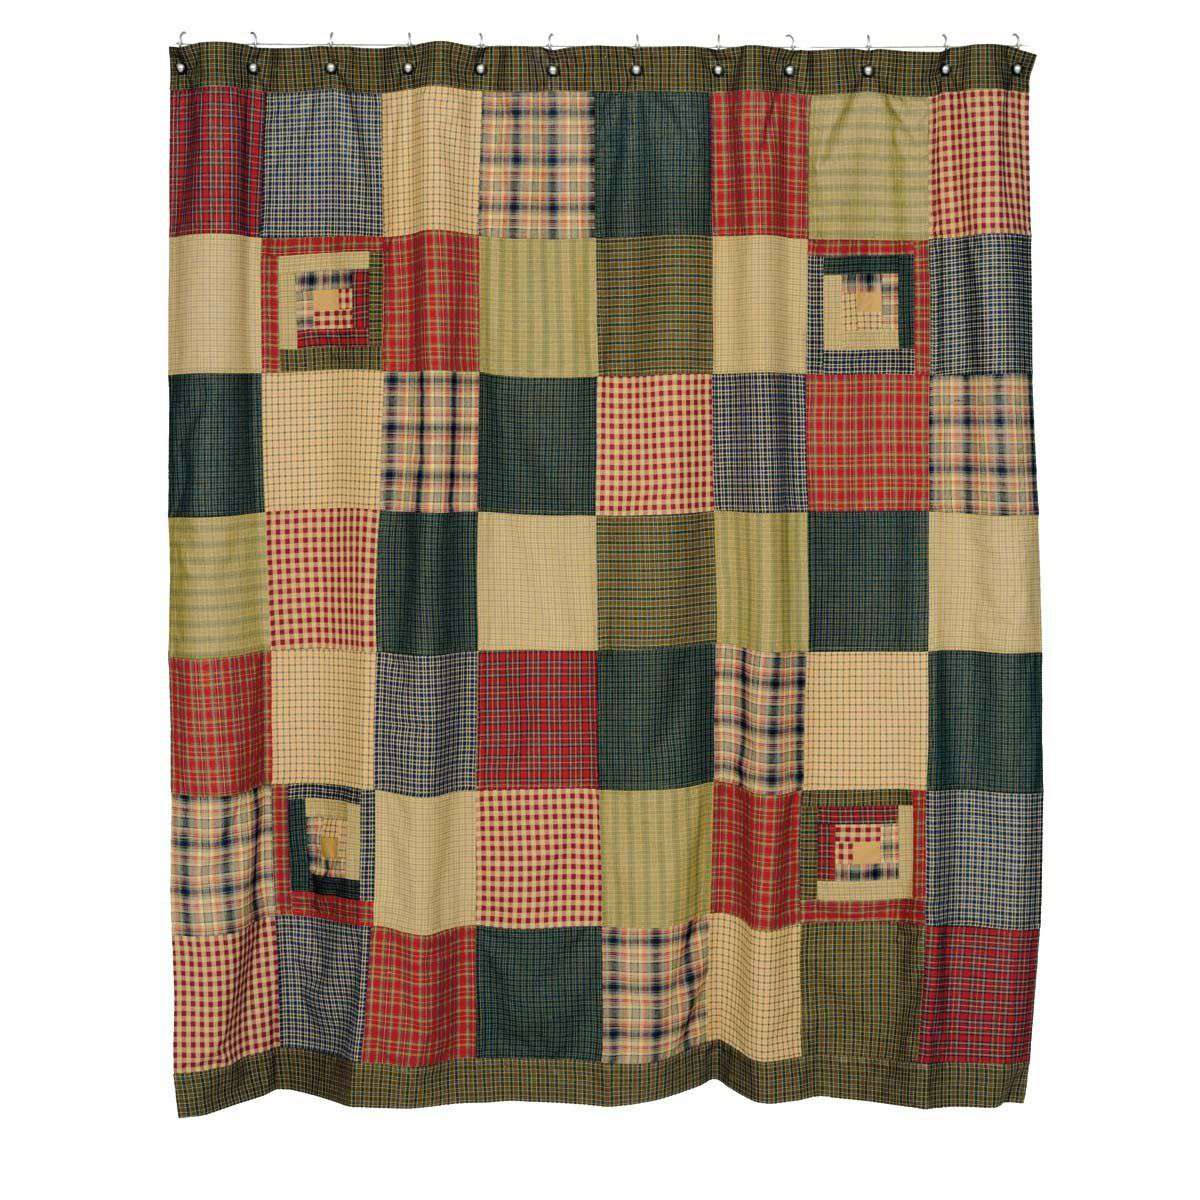 Tea Cabin Shower Curtain Patchwork 72"x72" curtain VHC Brands 